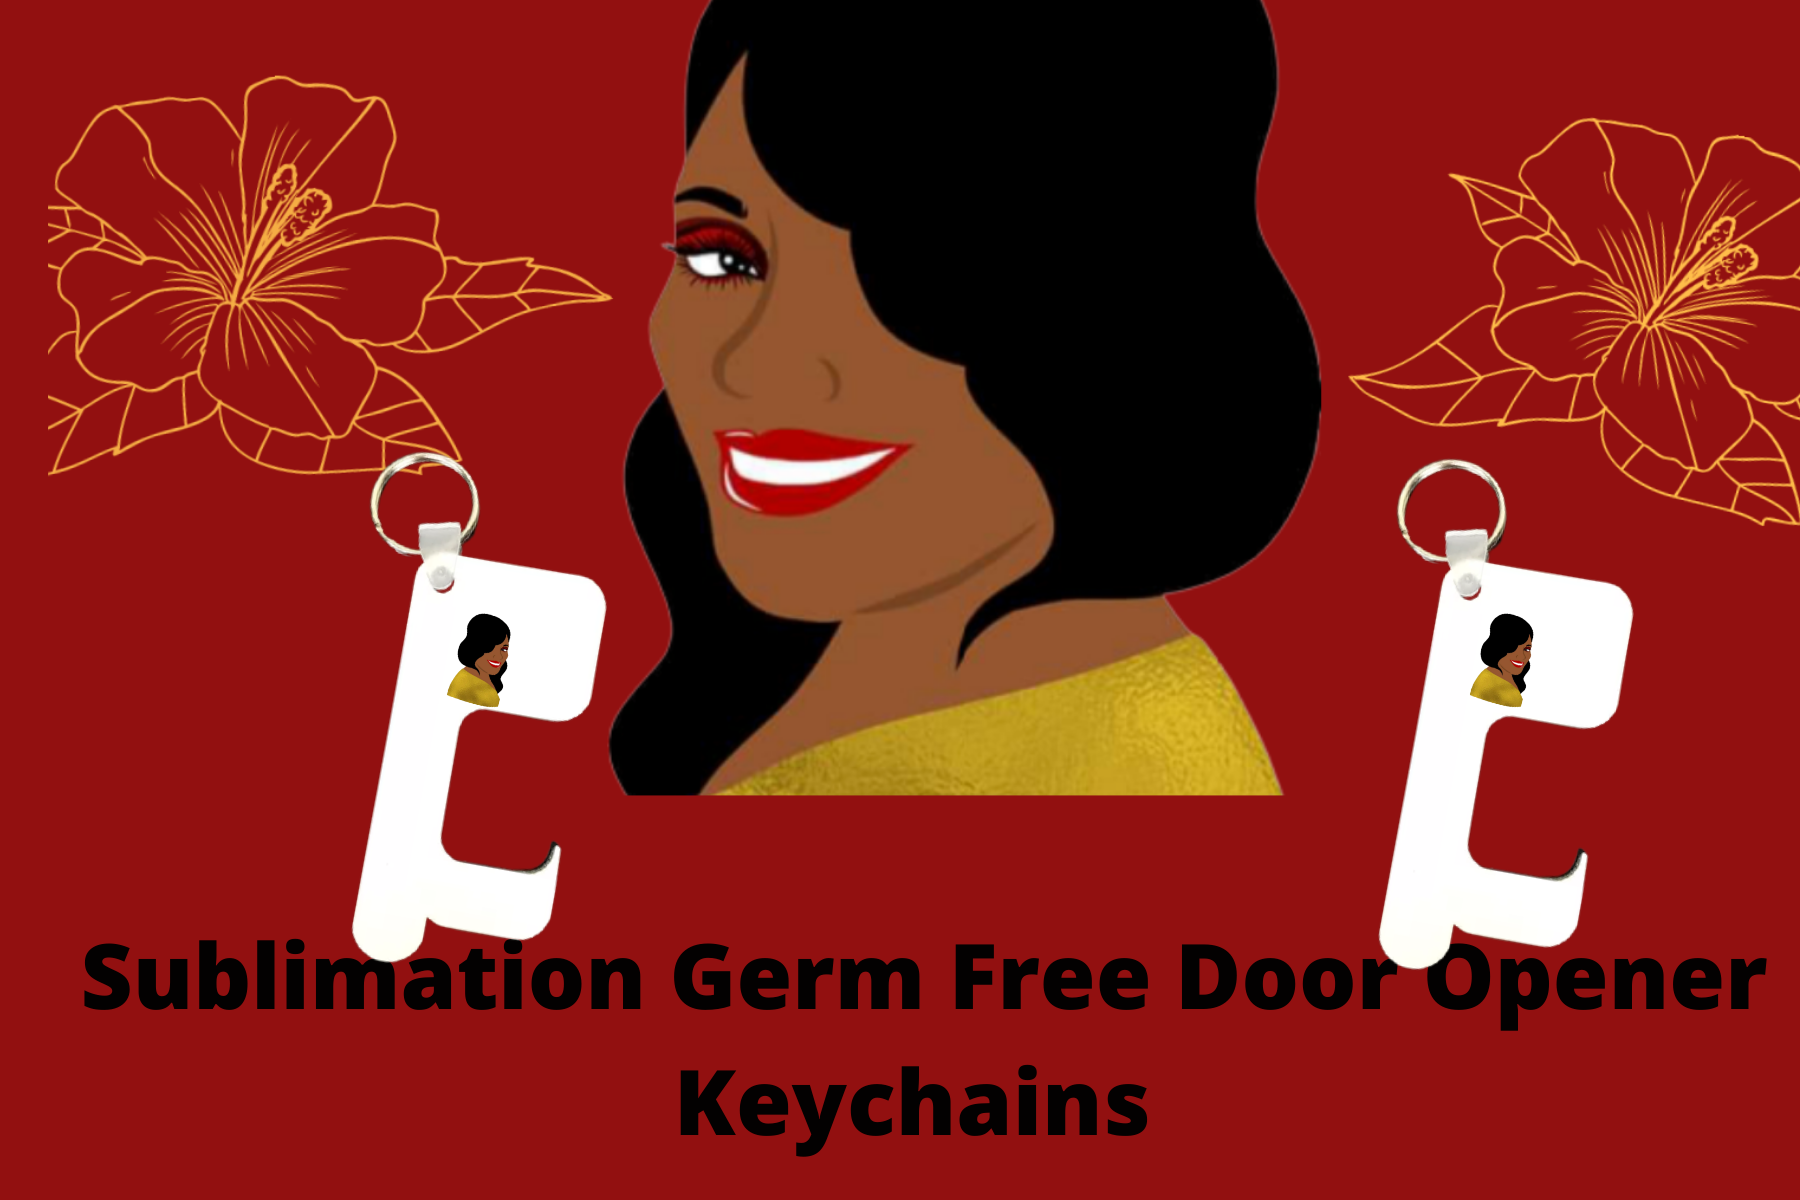 Sublimation Germ Free Door Opener Keychains